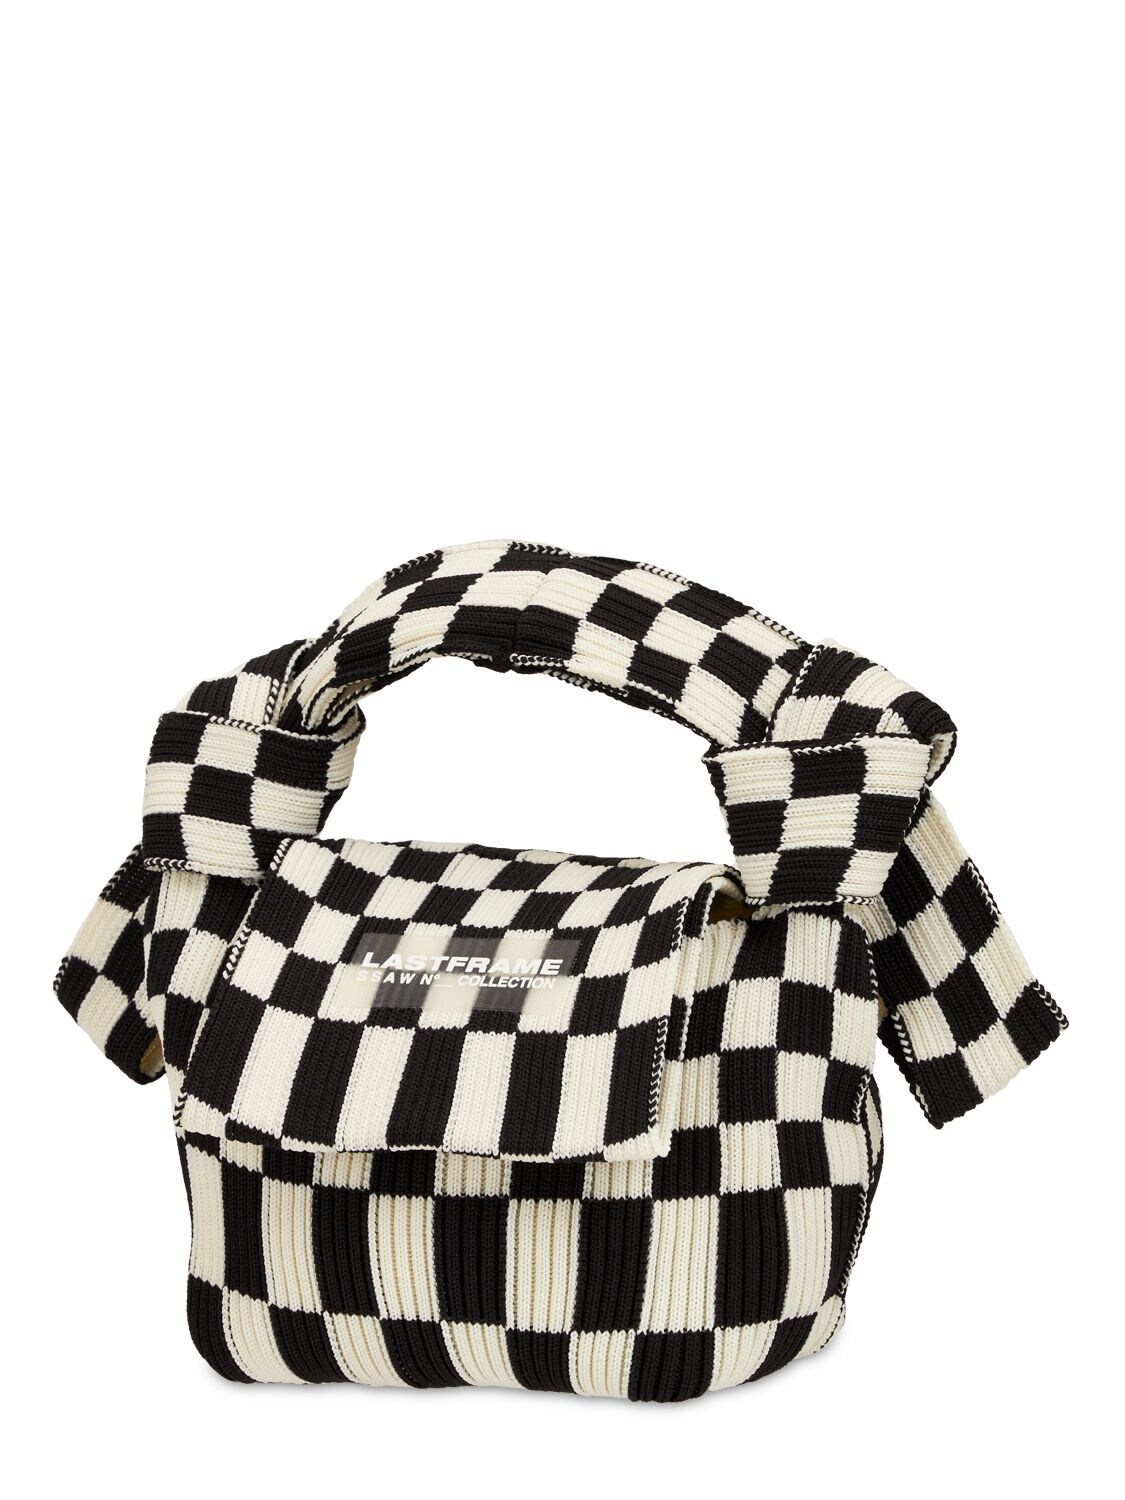 Lastframe Black And White Ichimatsu Mini Shoulder Bag | ModeSens